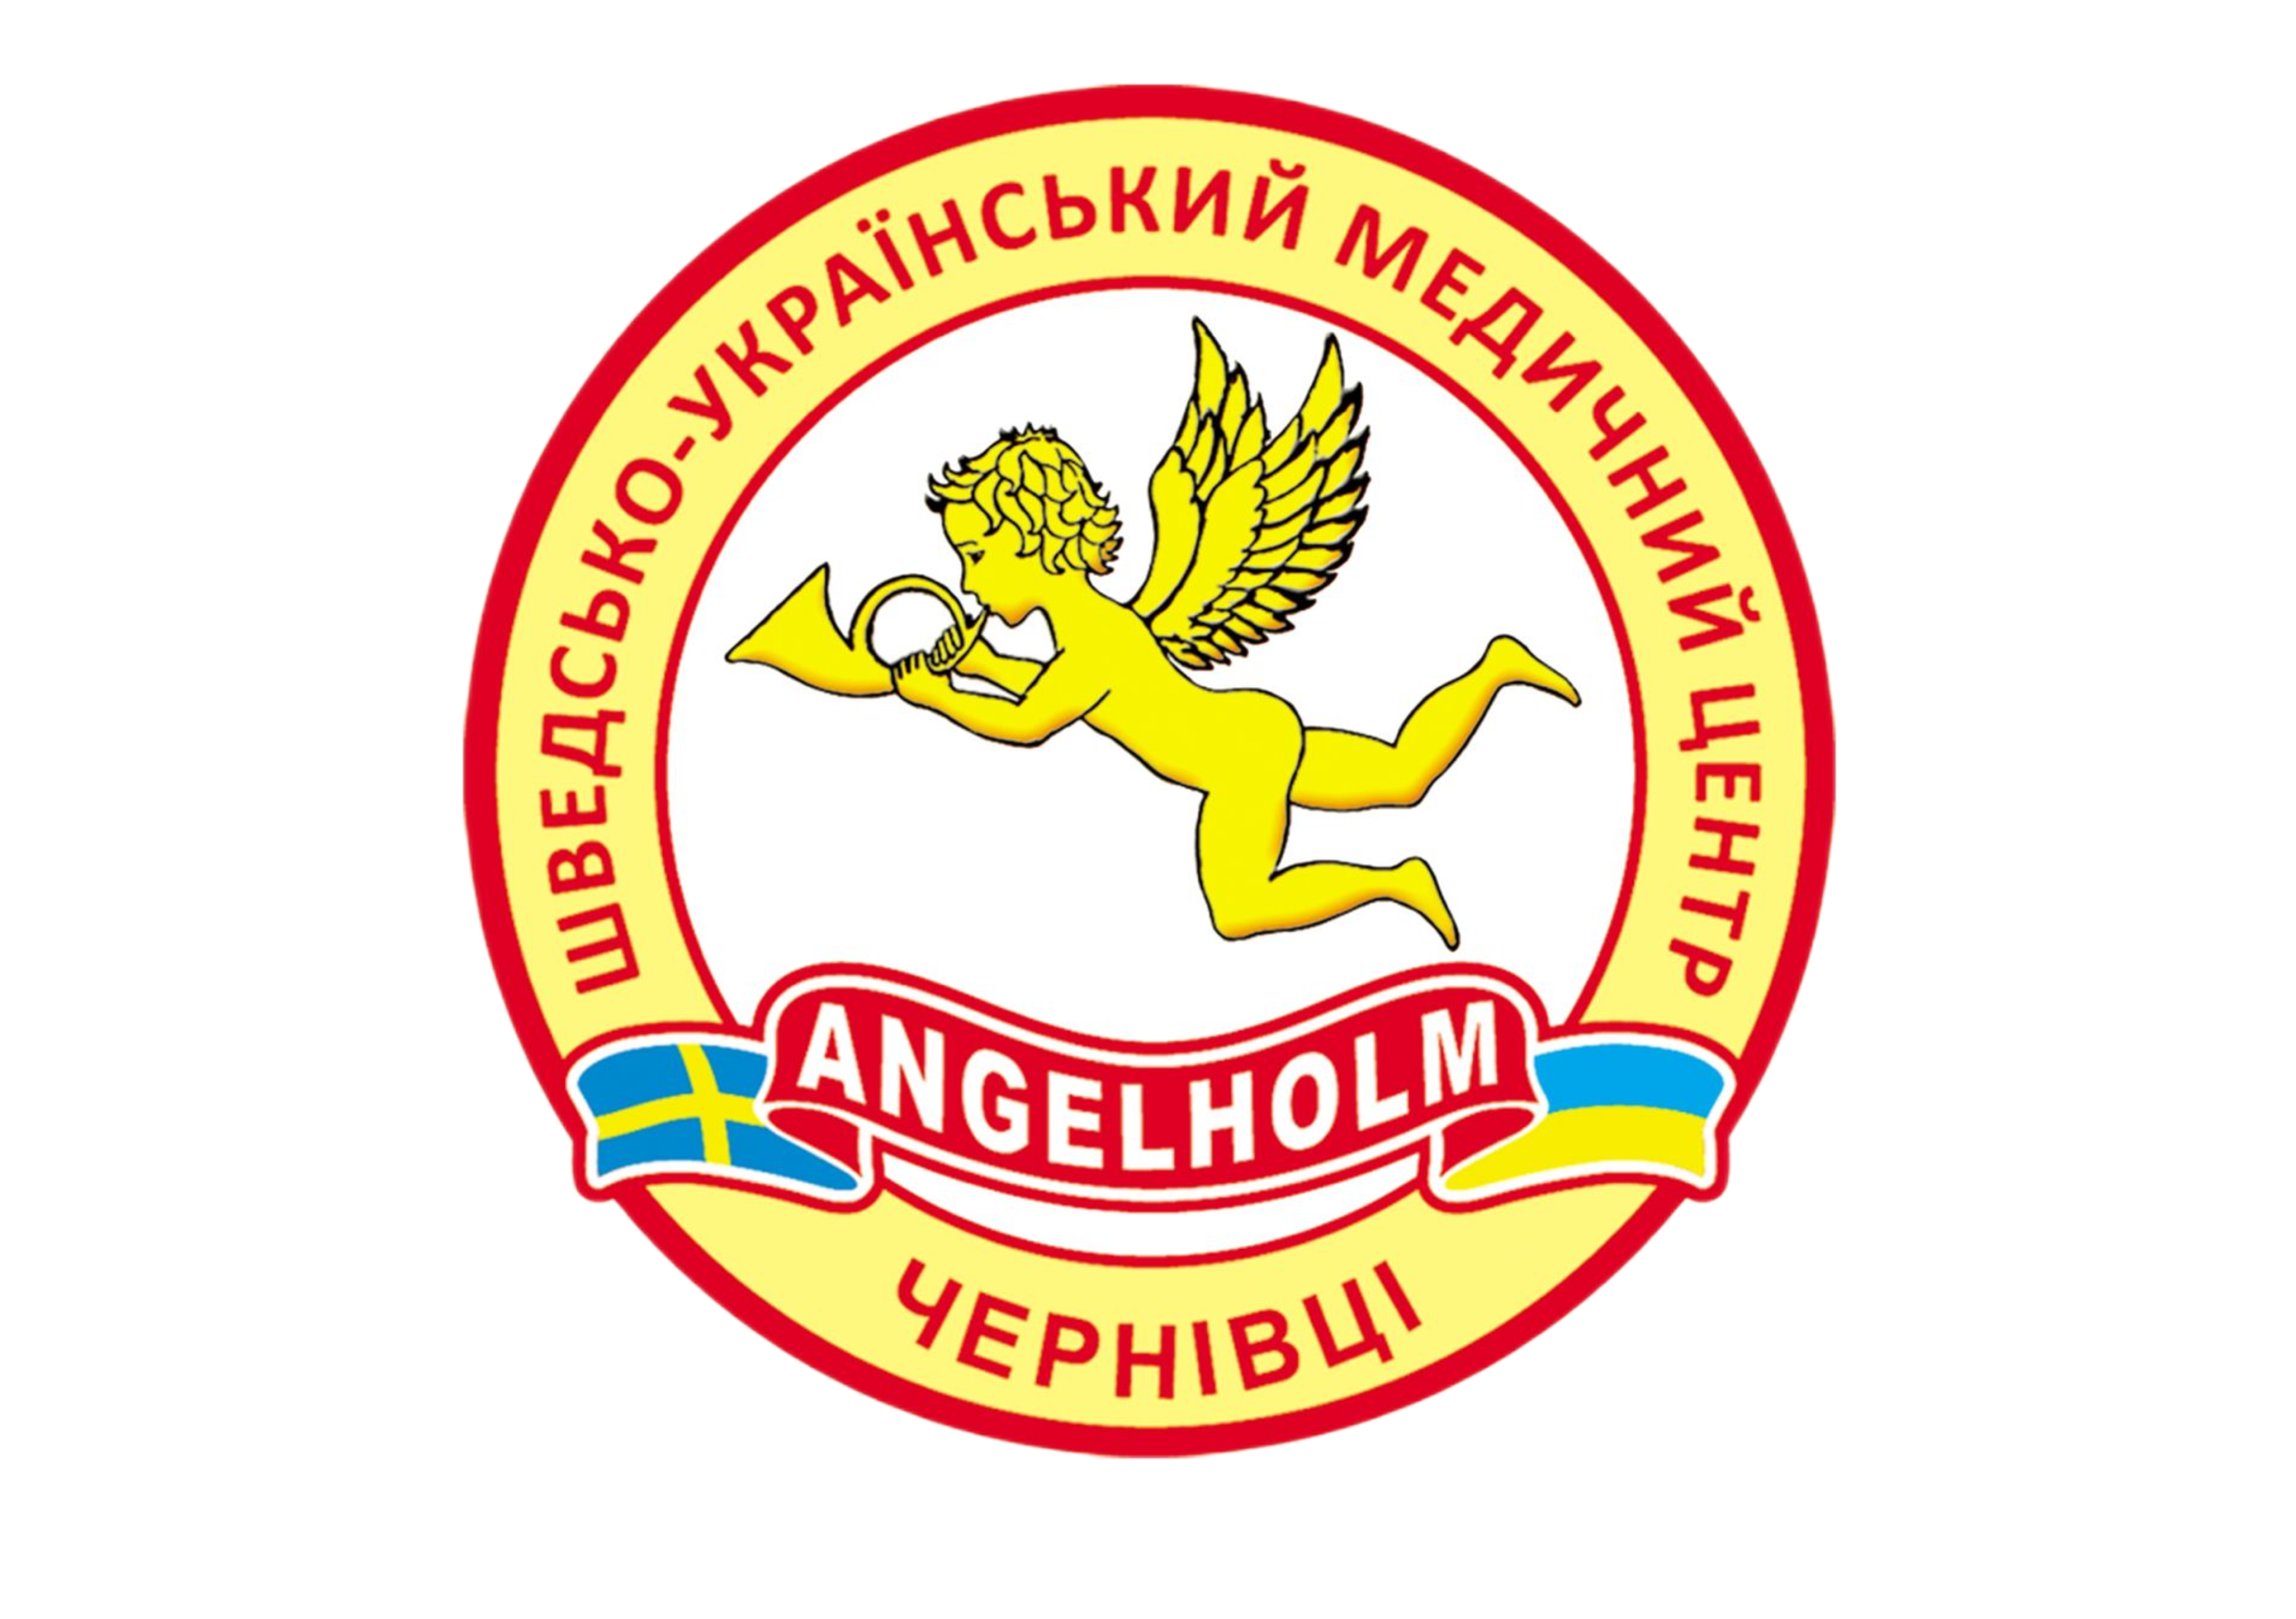 Angelholm